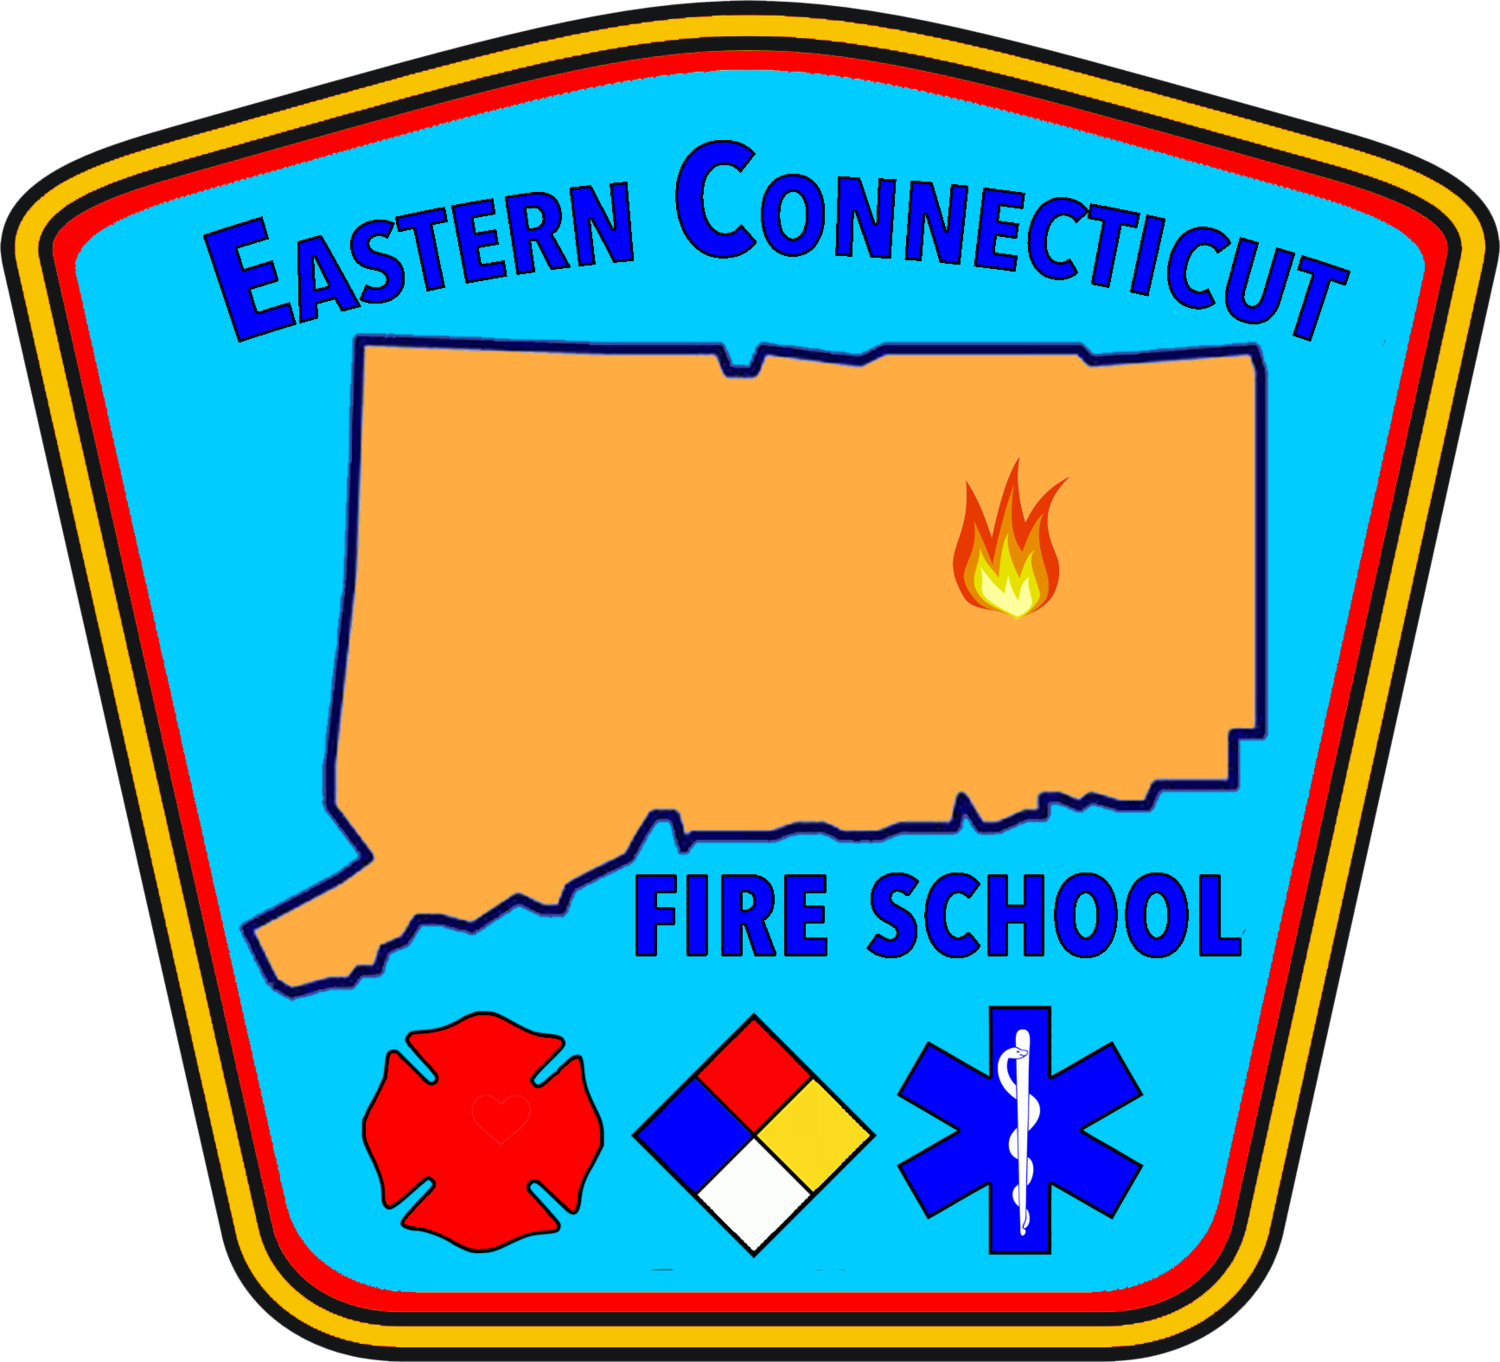 Eastern Connecticut Fire School